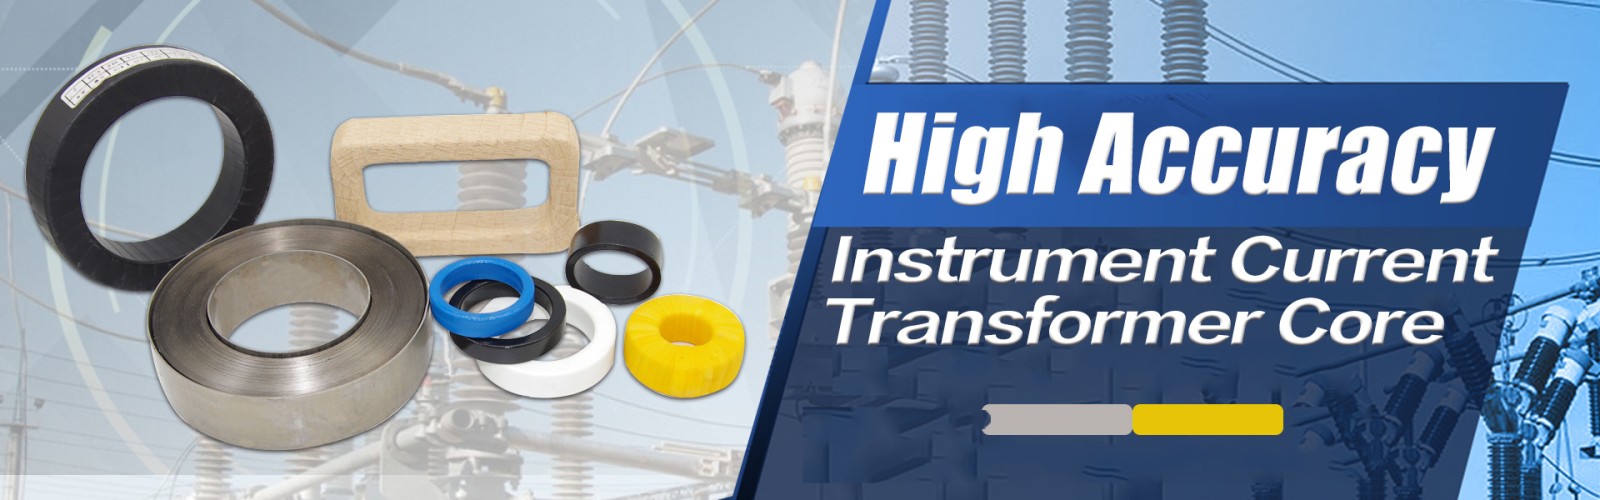 Instrument current transformer core